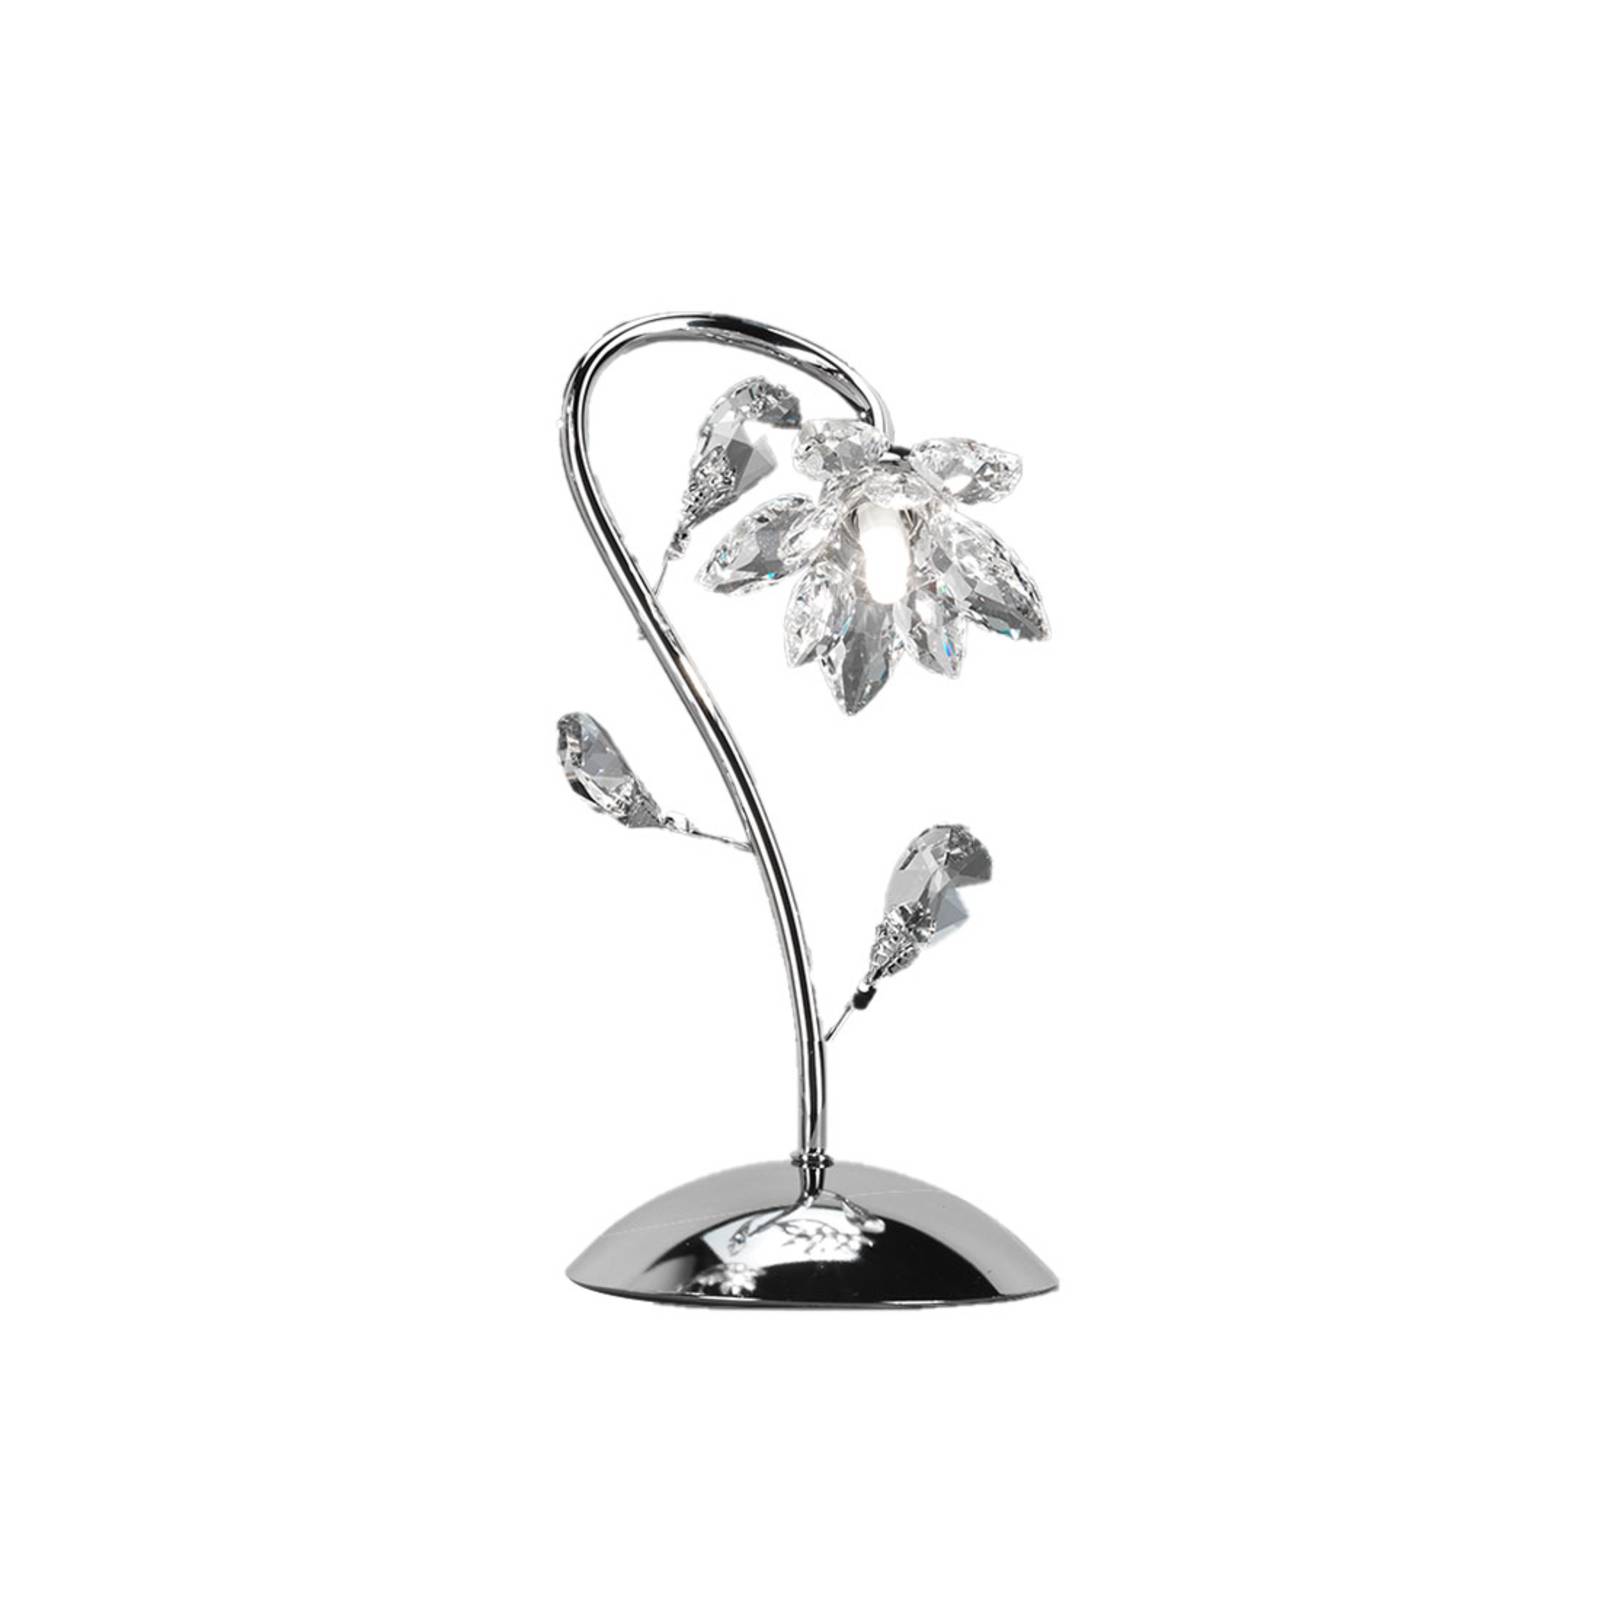 Tischleuchte Ninfea, Chrom, Kristallblüte, 35 cm